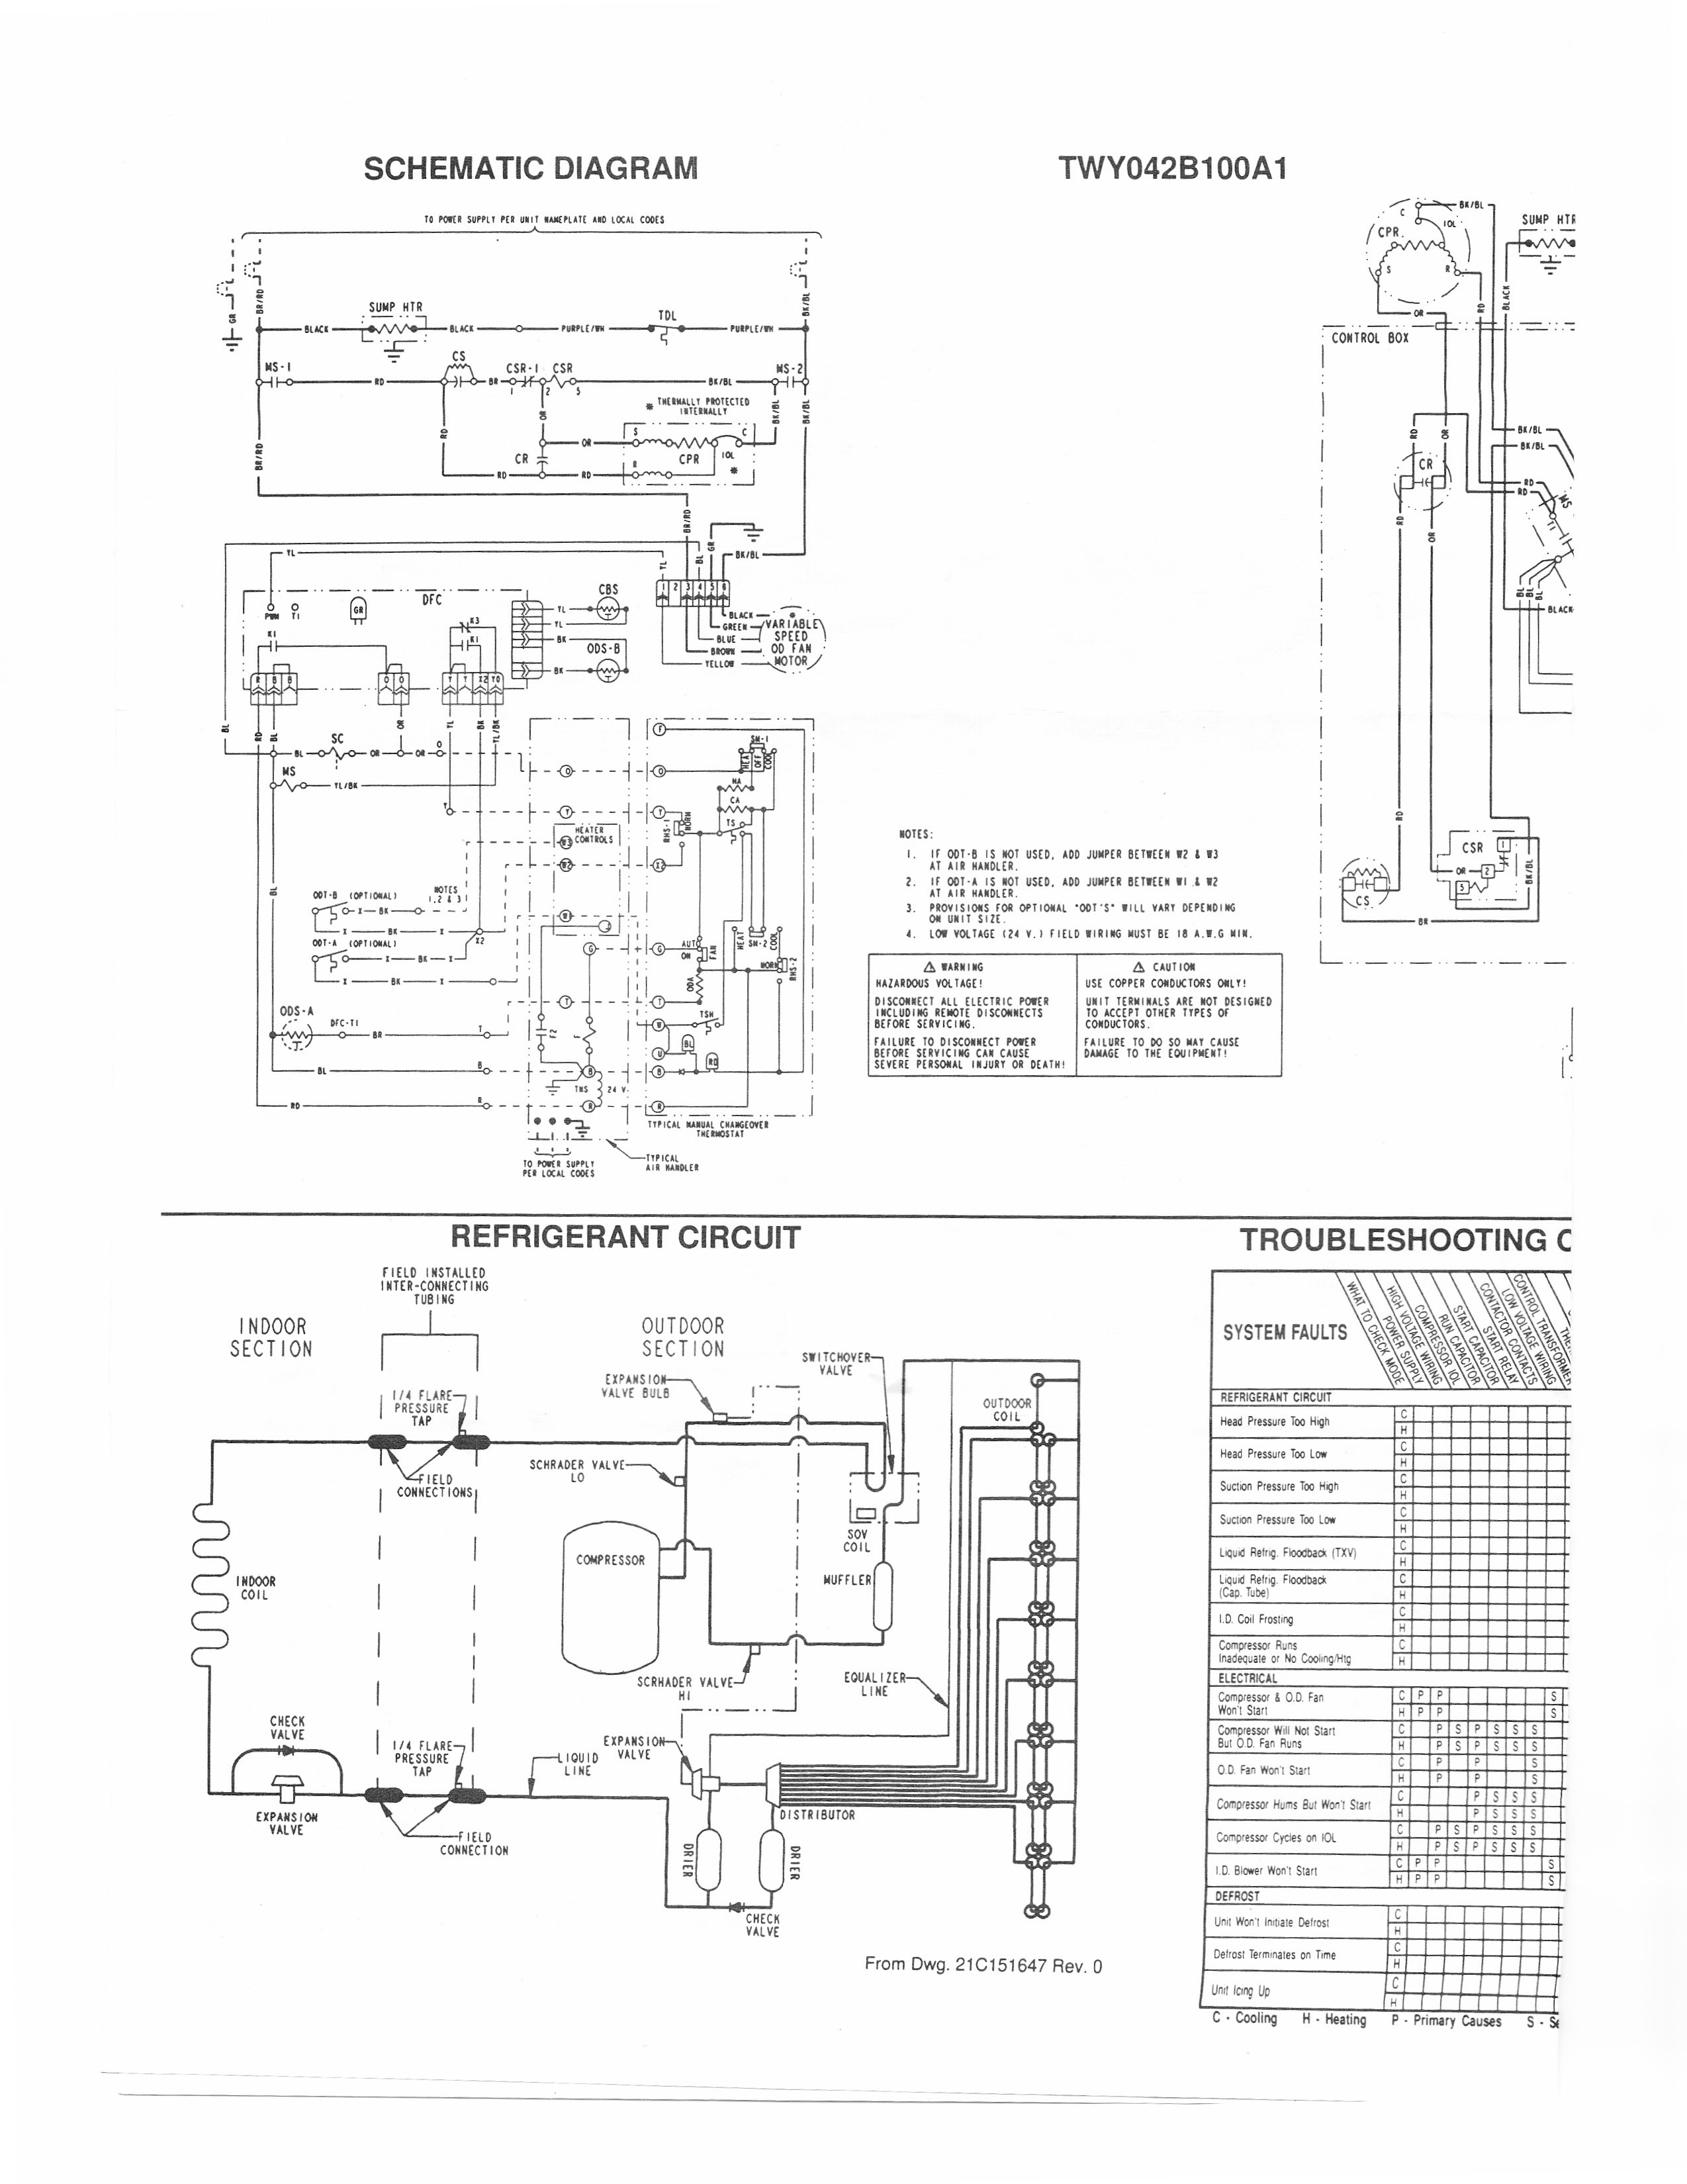 Electric Heat Strip Wiring Diagram Awesome I Have A Trane Xl1400 Heat Pump Model Twy042b100a1 and